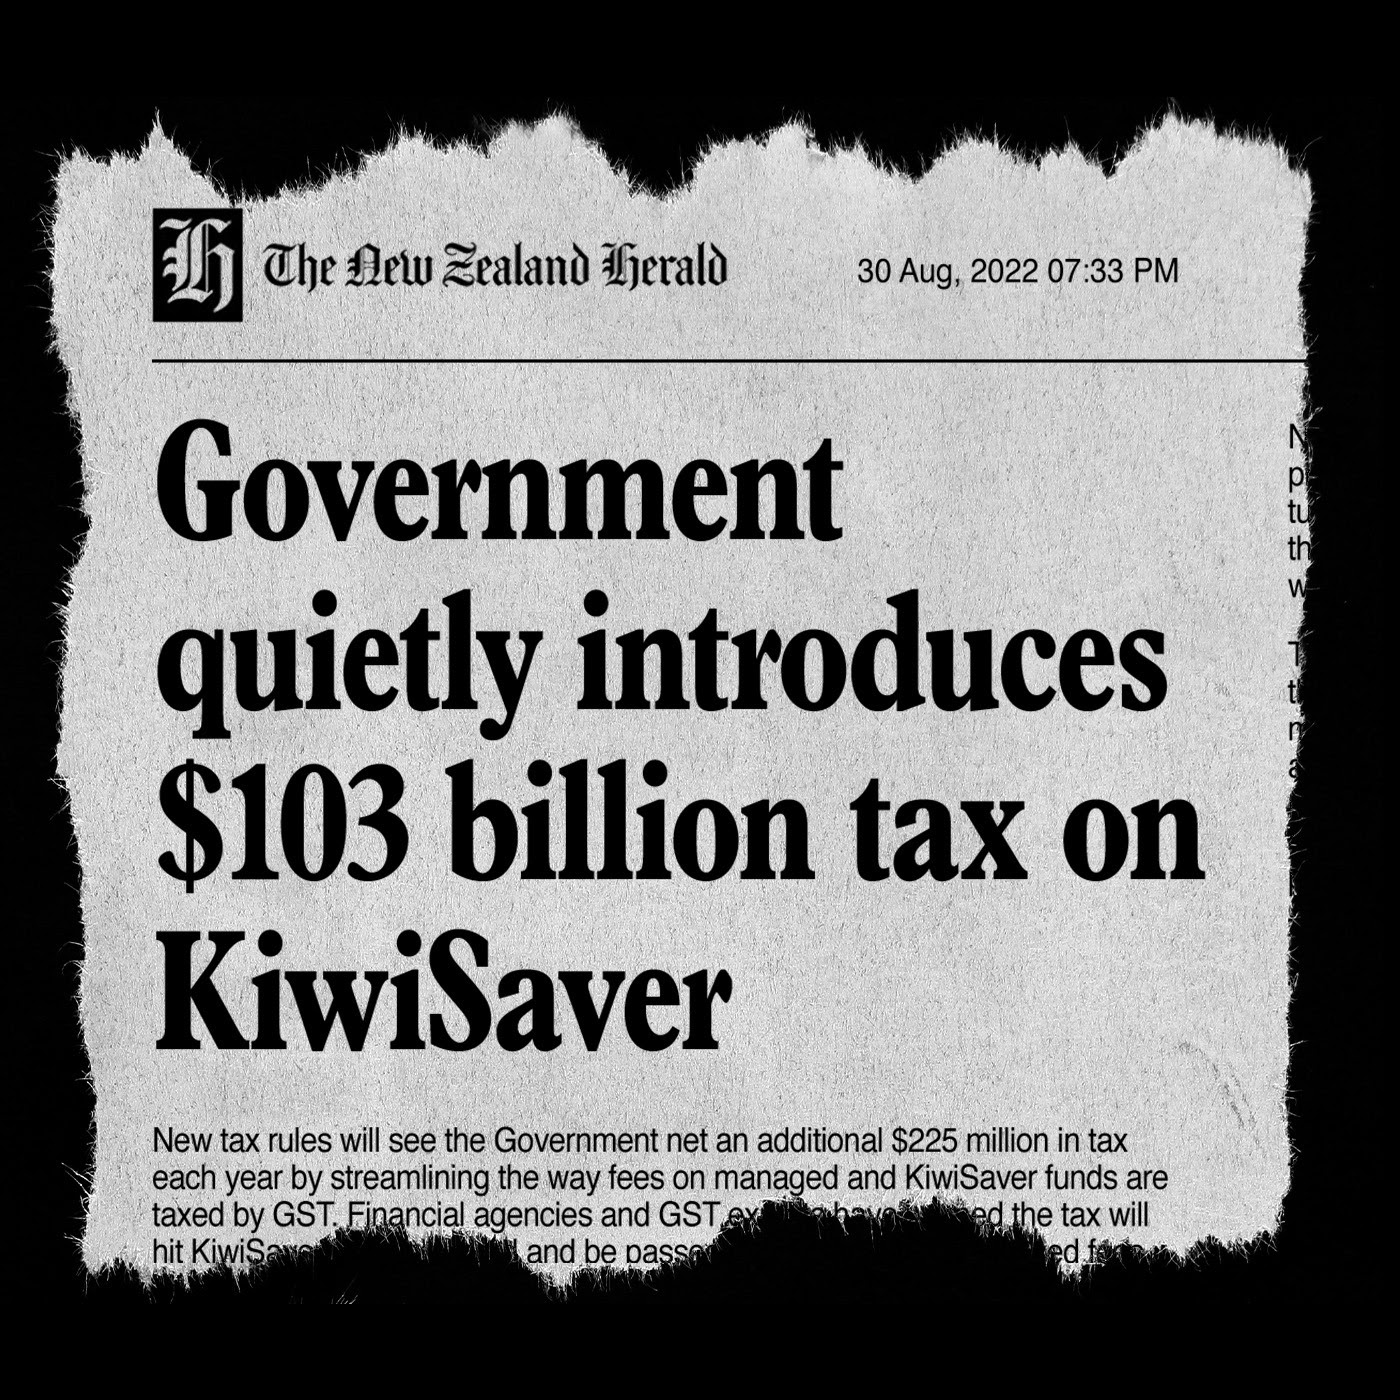 NZ Herald headline